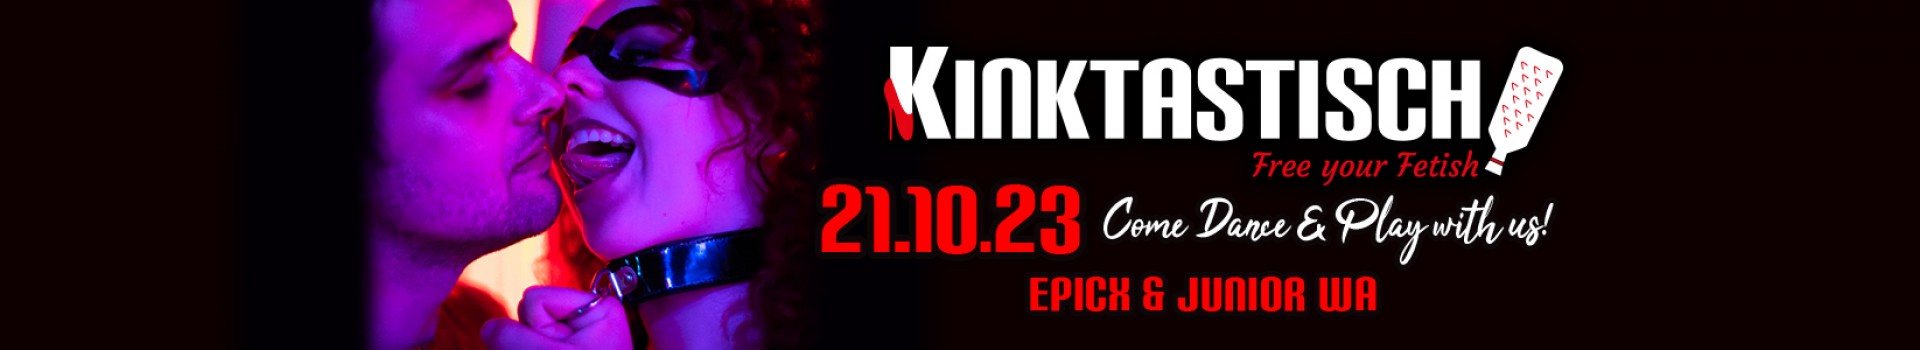 KINKTASTISCH! Dance, Play & Explore Kink!